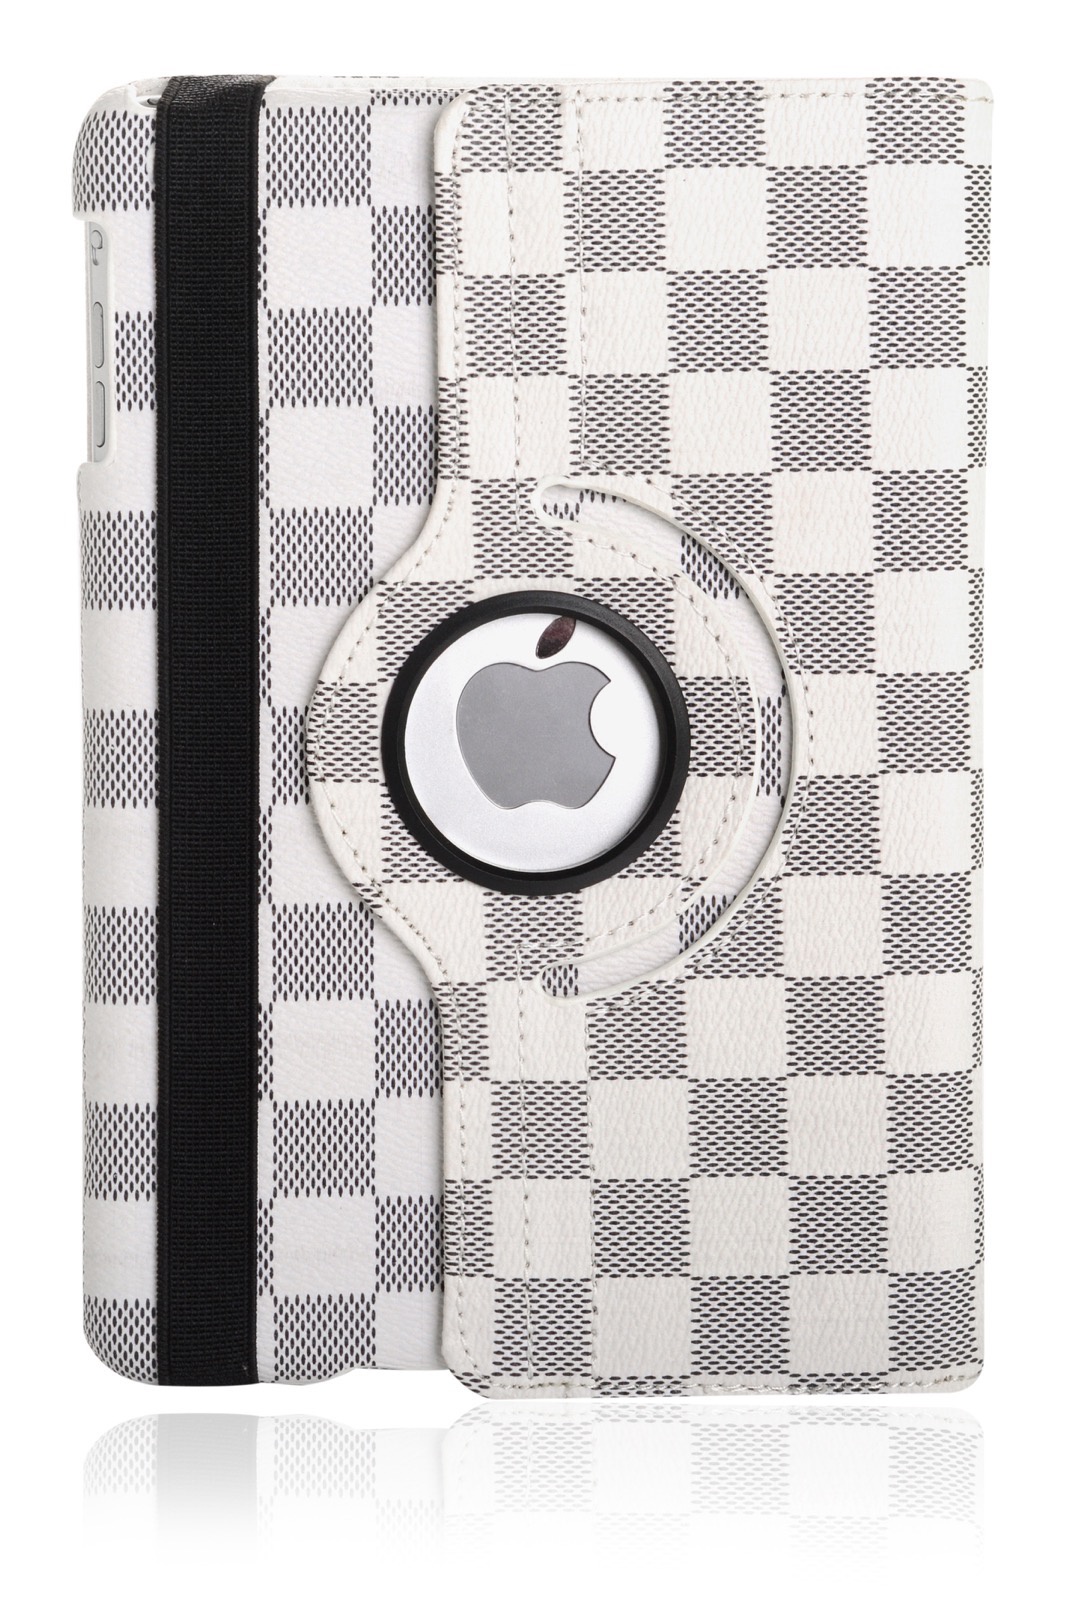 Чехол для планшета Gurdini книжка 410066 поворотный 360 в шашечку для Apple iPad mini 1/2/3 7.9